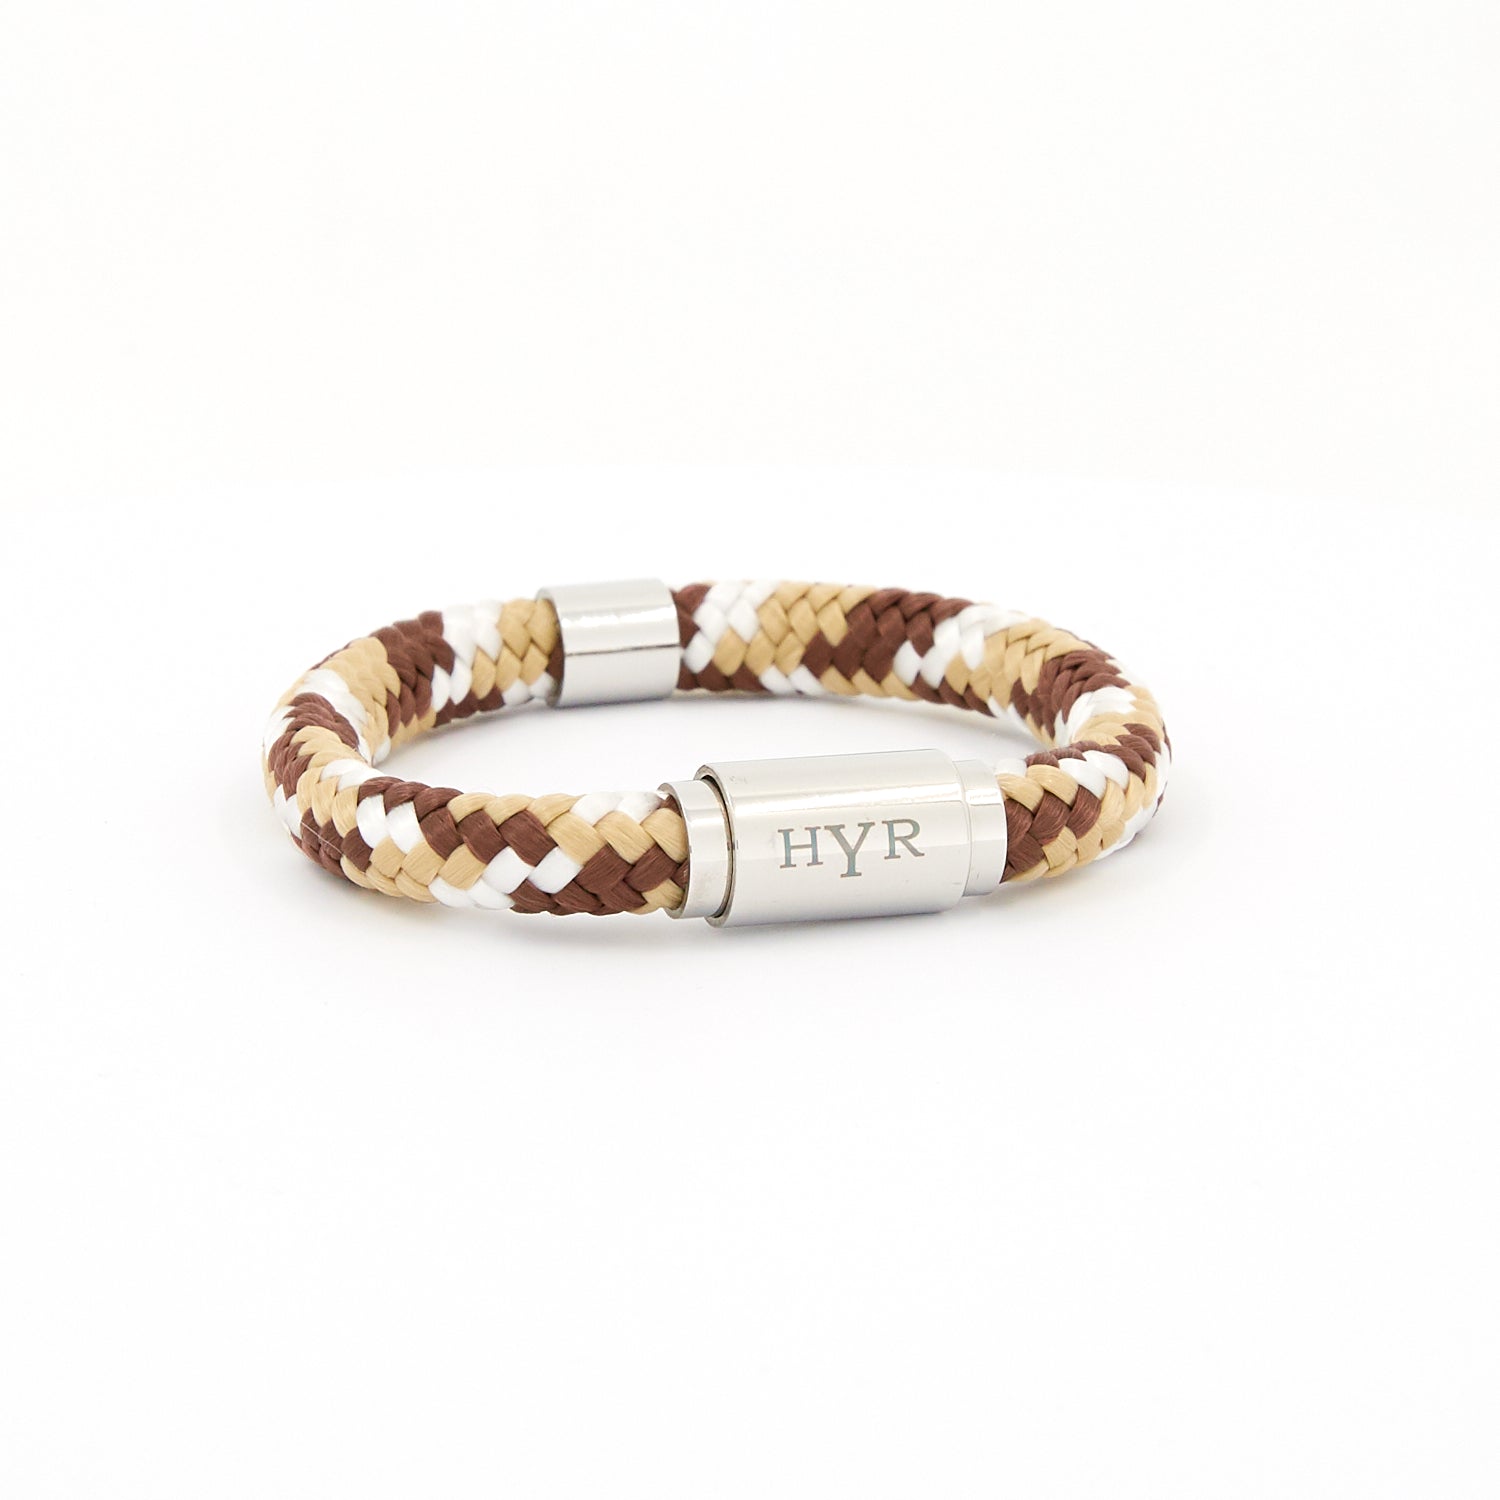 Combat Brown mix rope bracelet - silver